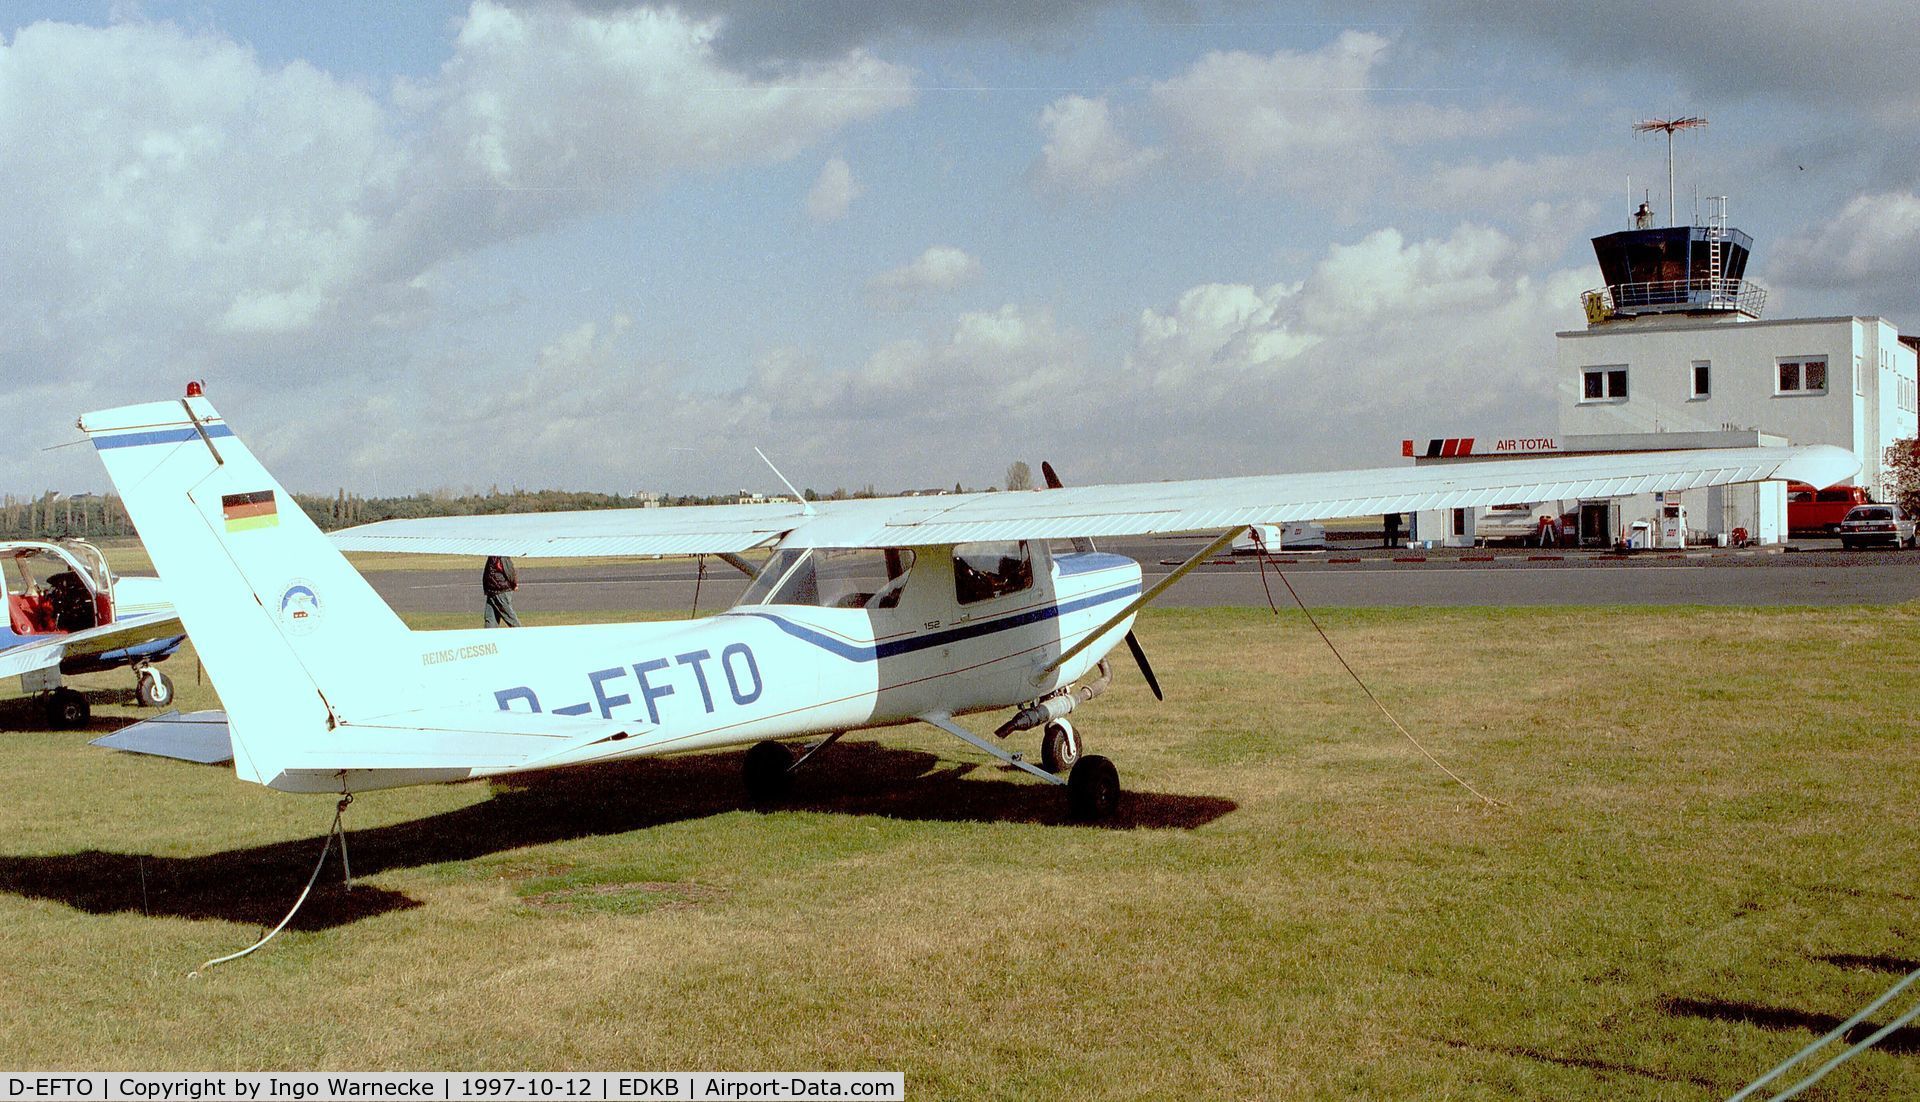 D-EFTO, Reims F152 C/N 1958, Cessna (Reims) F152 at Bonn-Hangelar airfield